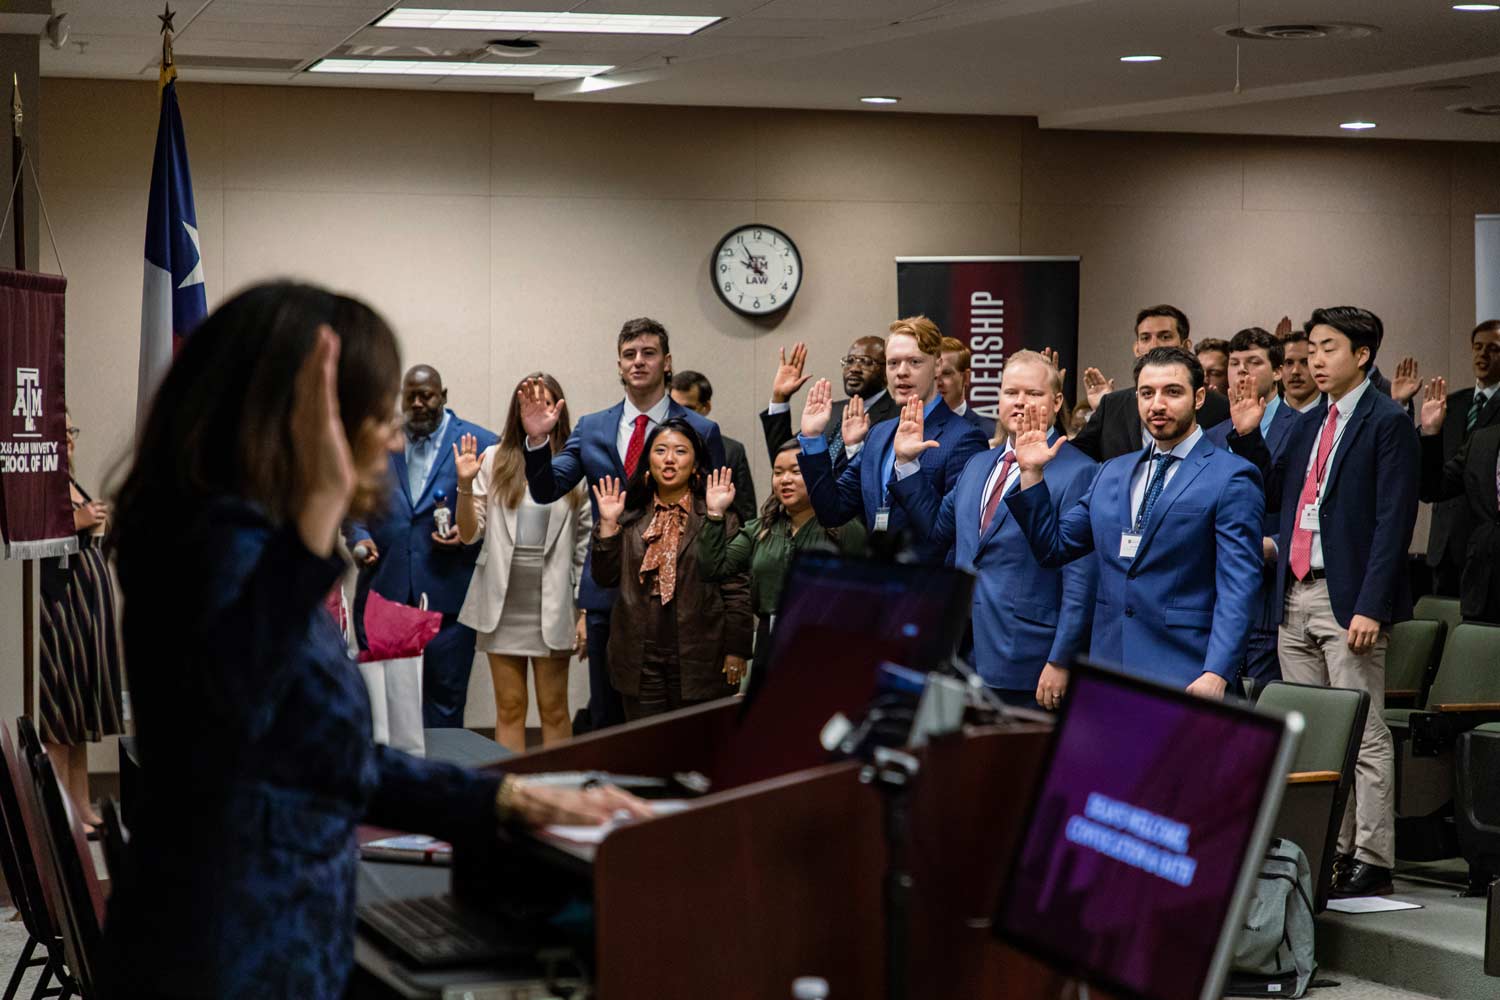 Texas A&M Law School students get sworn in